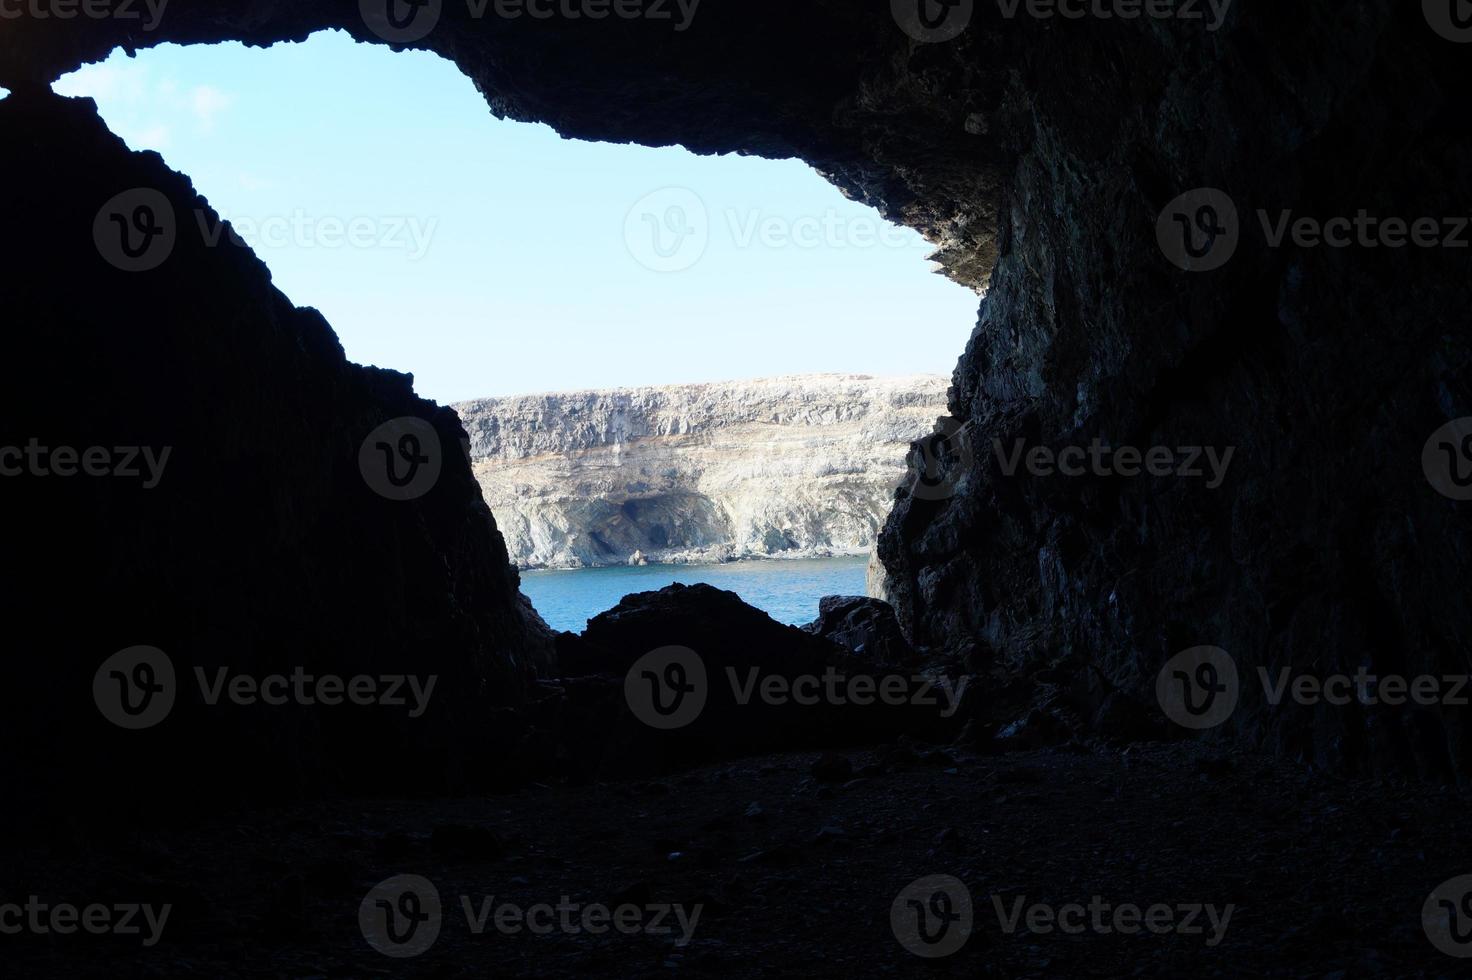 The Caves of Ajuy - Fuerteventura - Spain photo